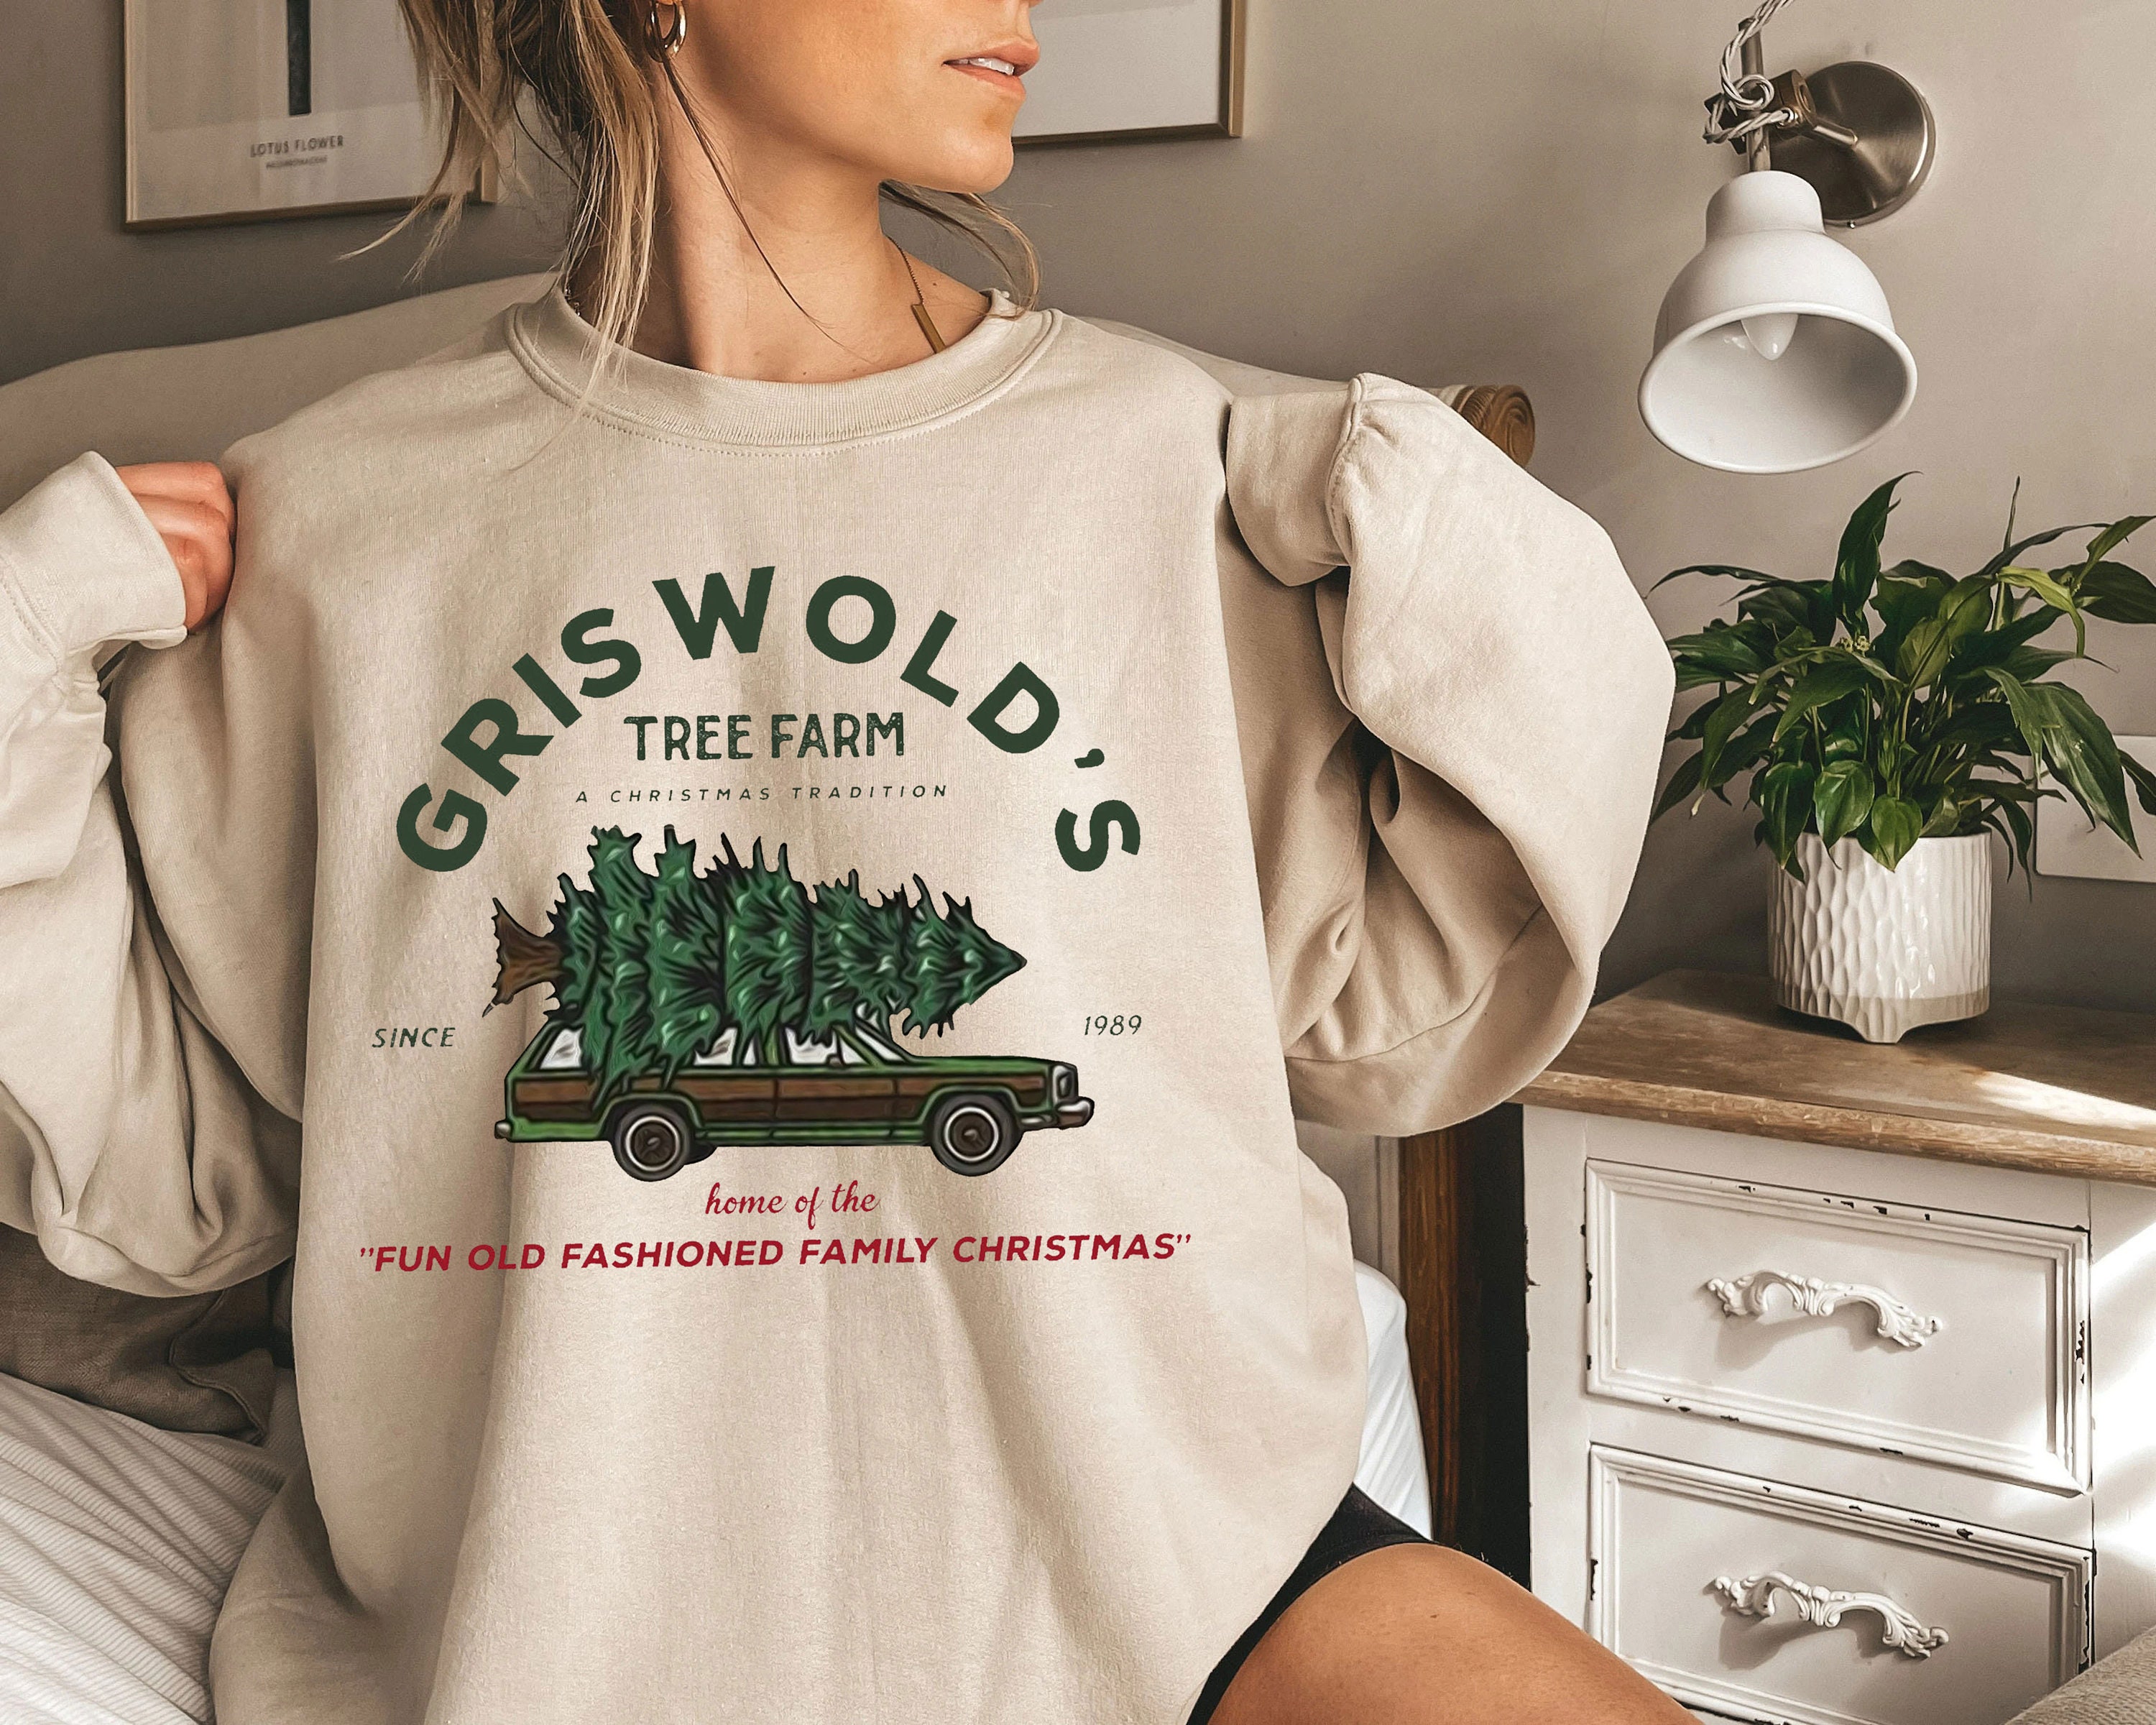 Discover Griswold's Tree Farm Since 1989 Sweatshirt, Christmas Sweatshirt